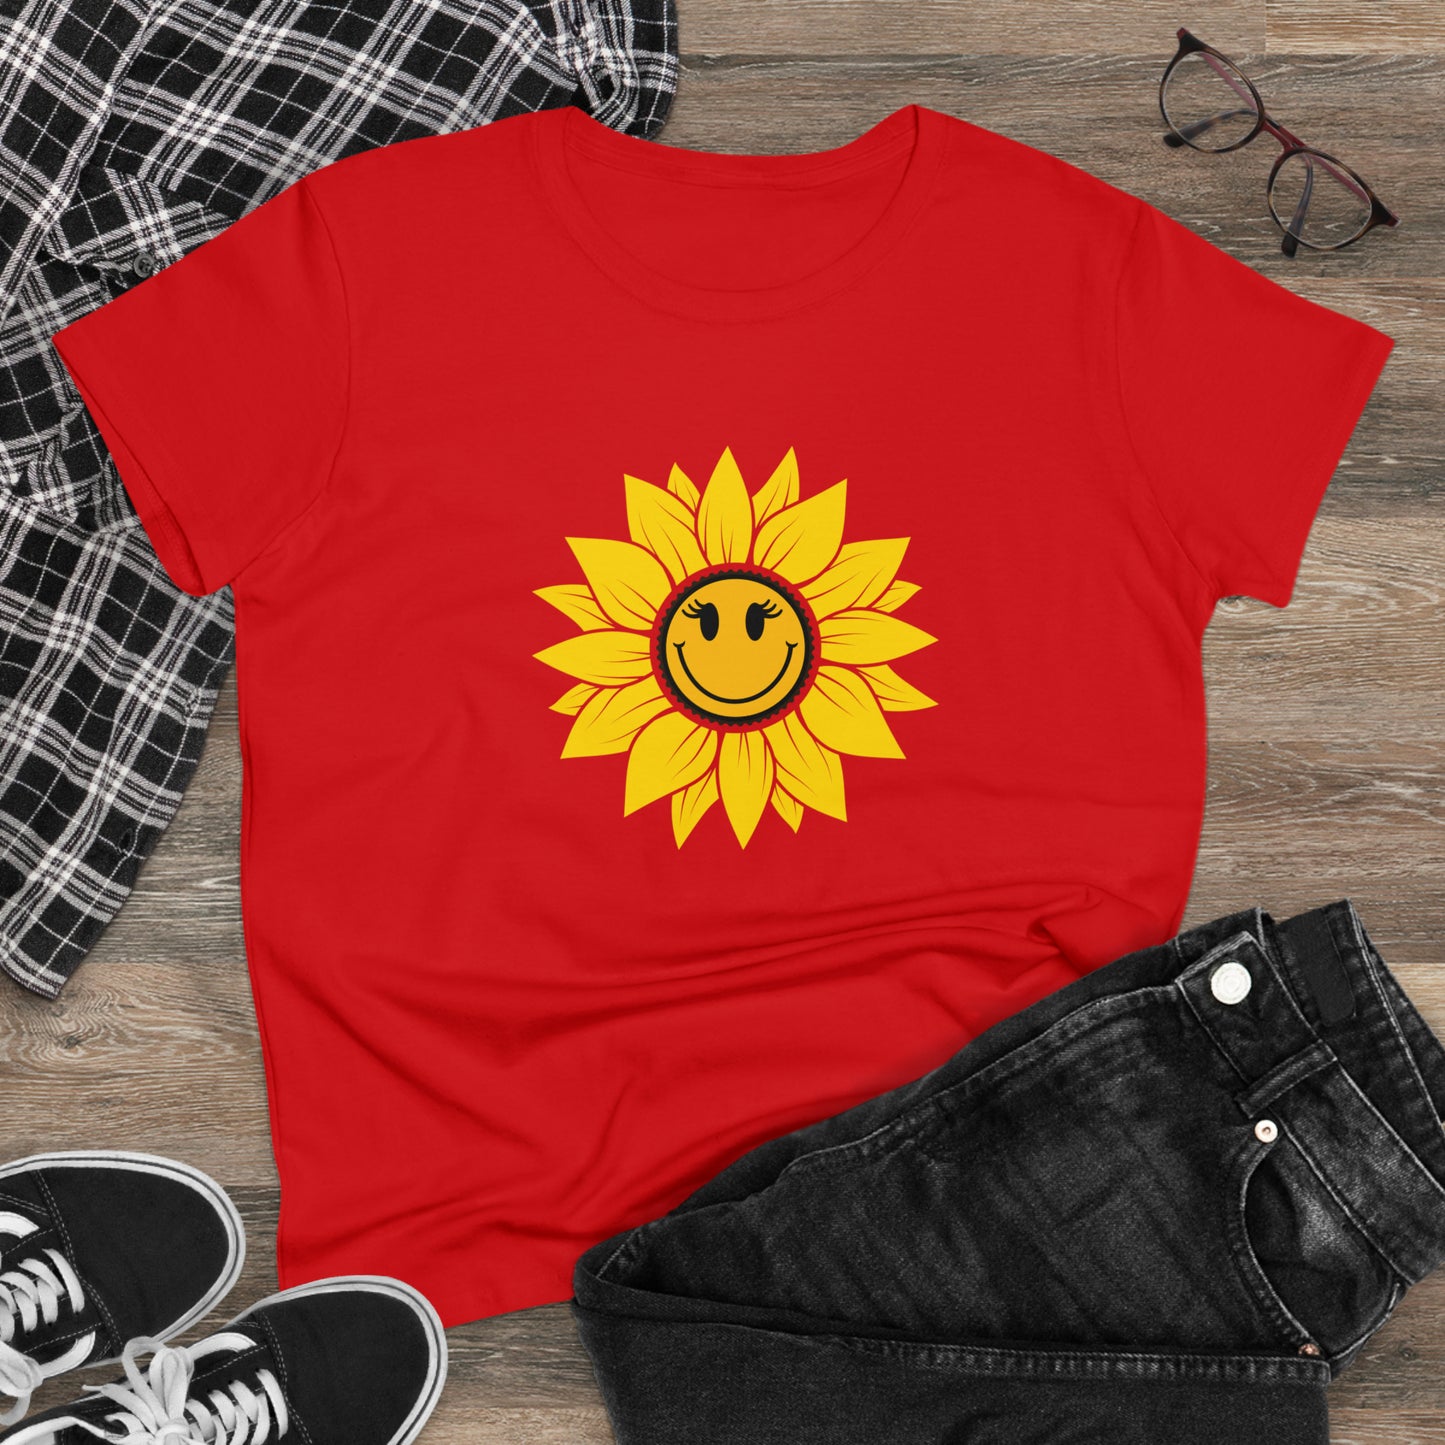 Positive, Sunflower, Nature, Gardens, Flowers, Garden- Adult, Semi-fitted, Half Caffeinated (Smaller Size Image), T-shirt